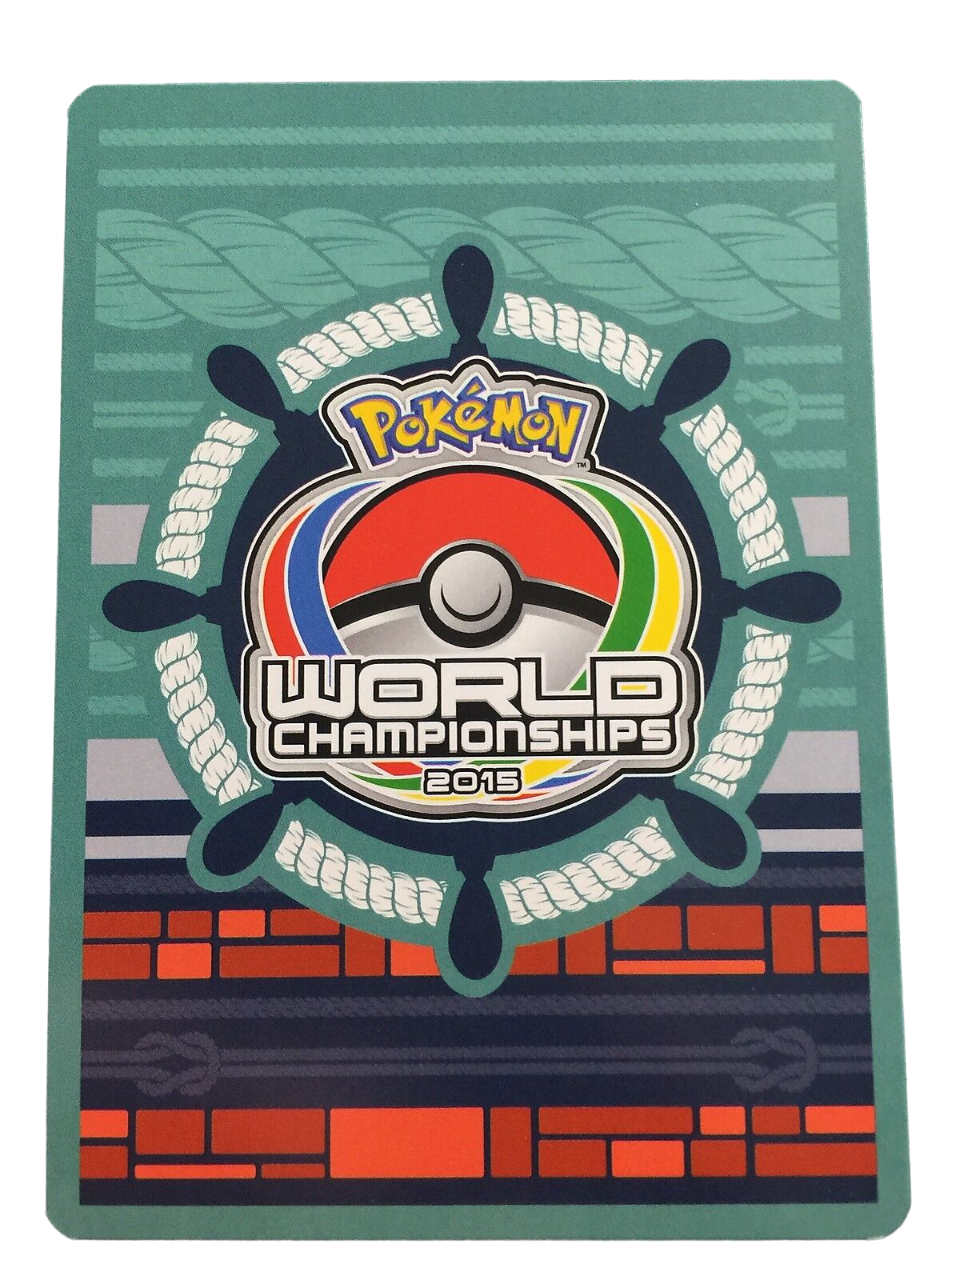 2015 World Championship card back